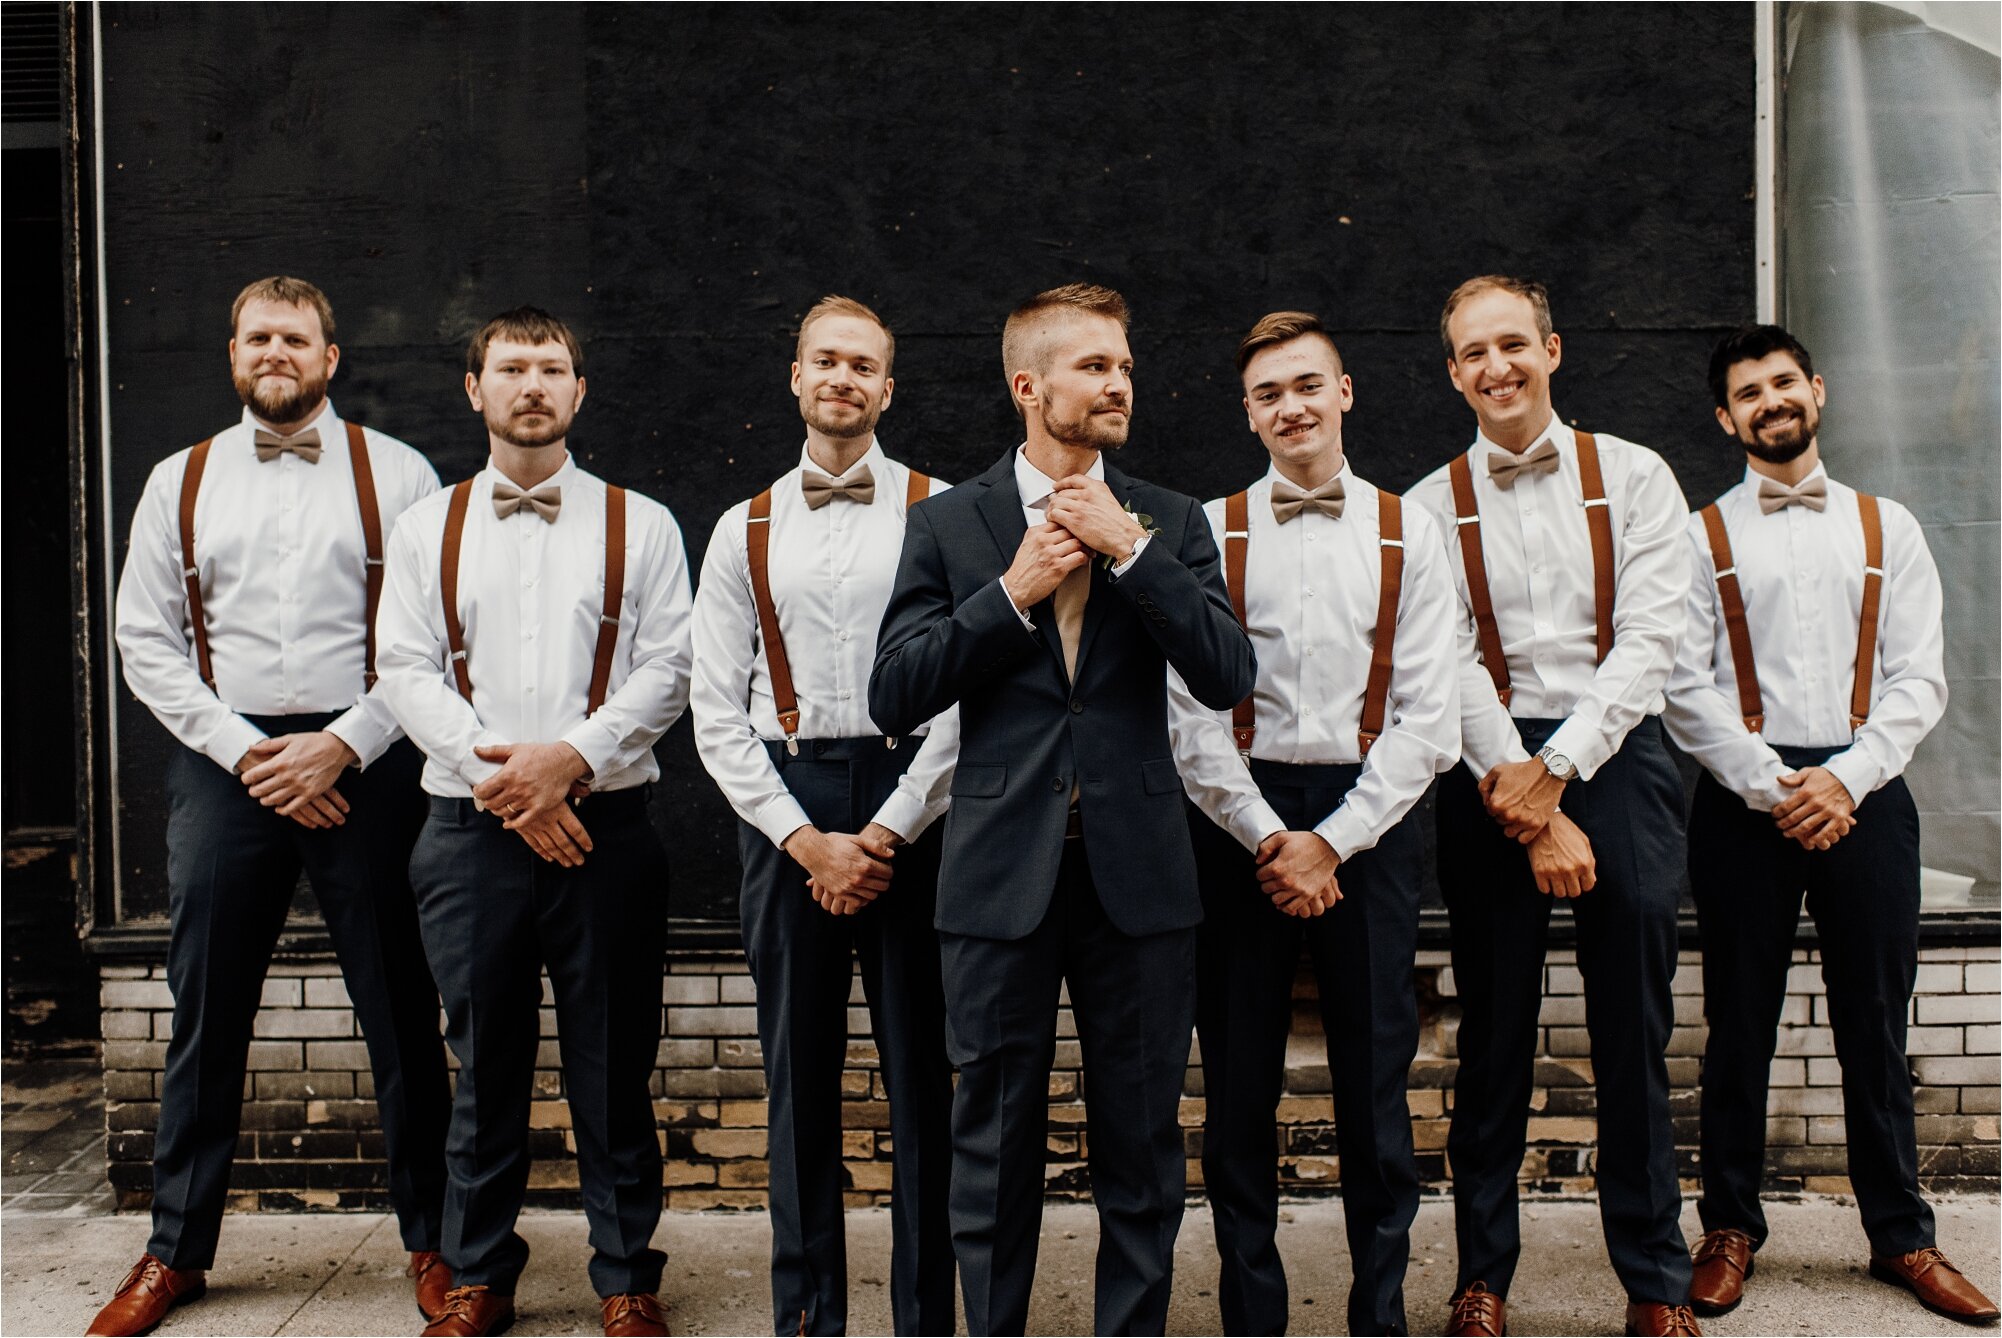  groomsmen in bowties for wedding suspenders outfit ideas  